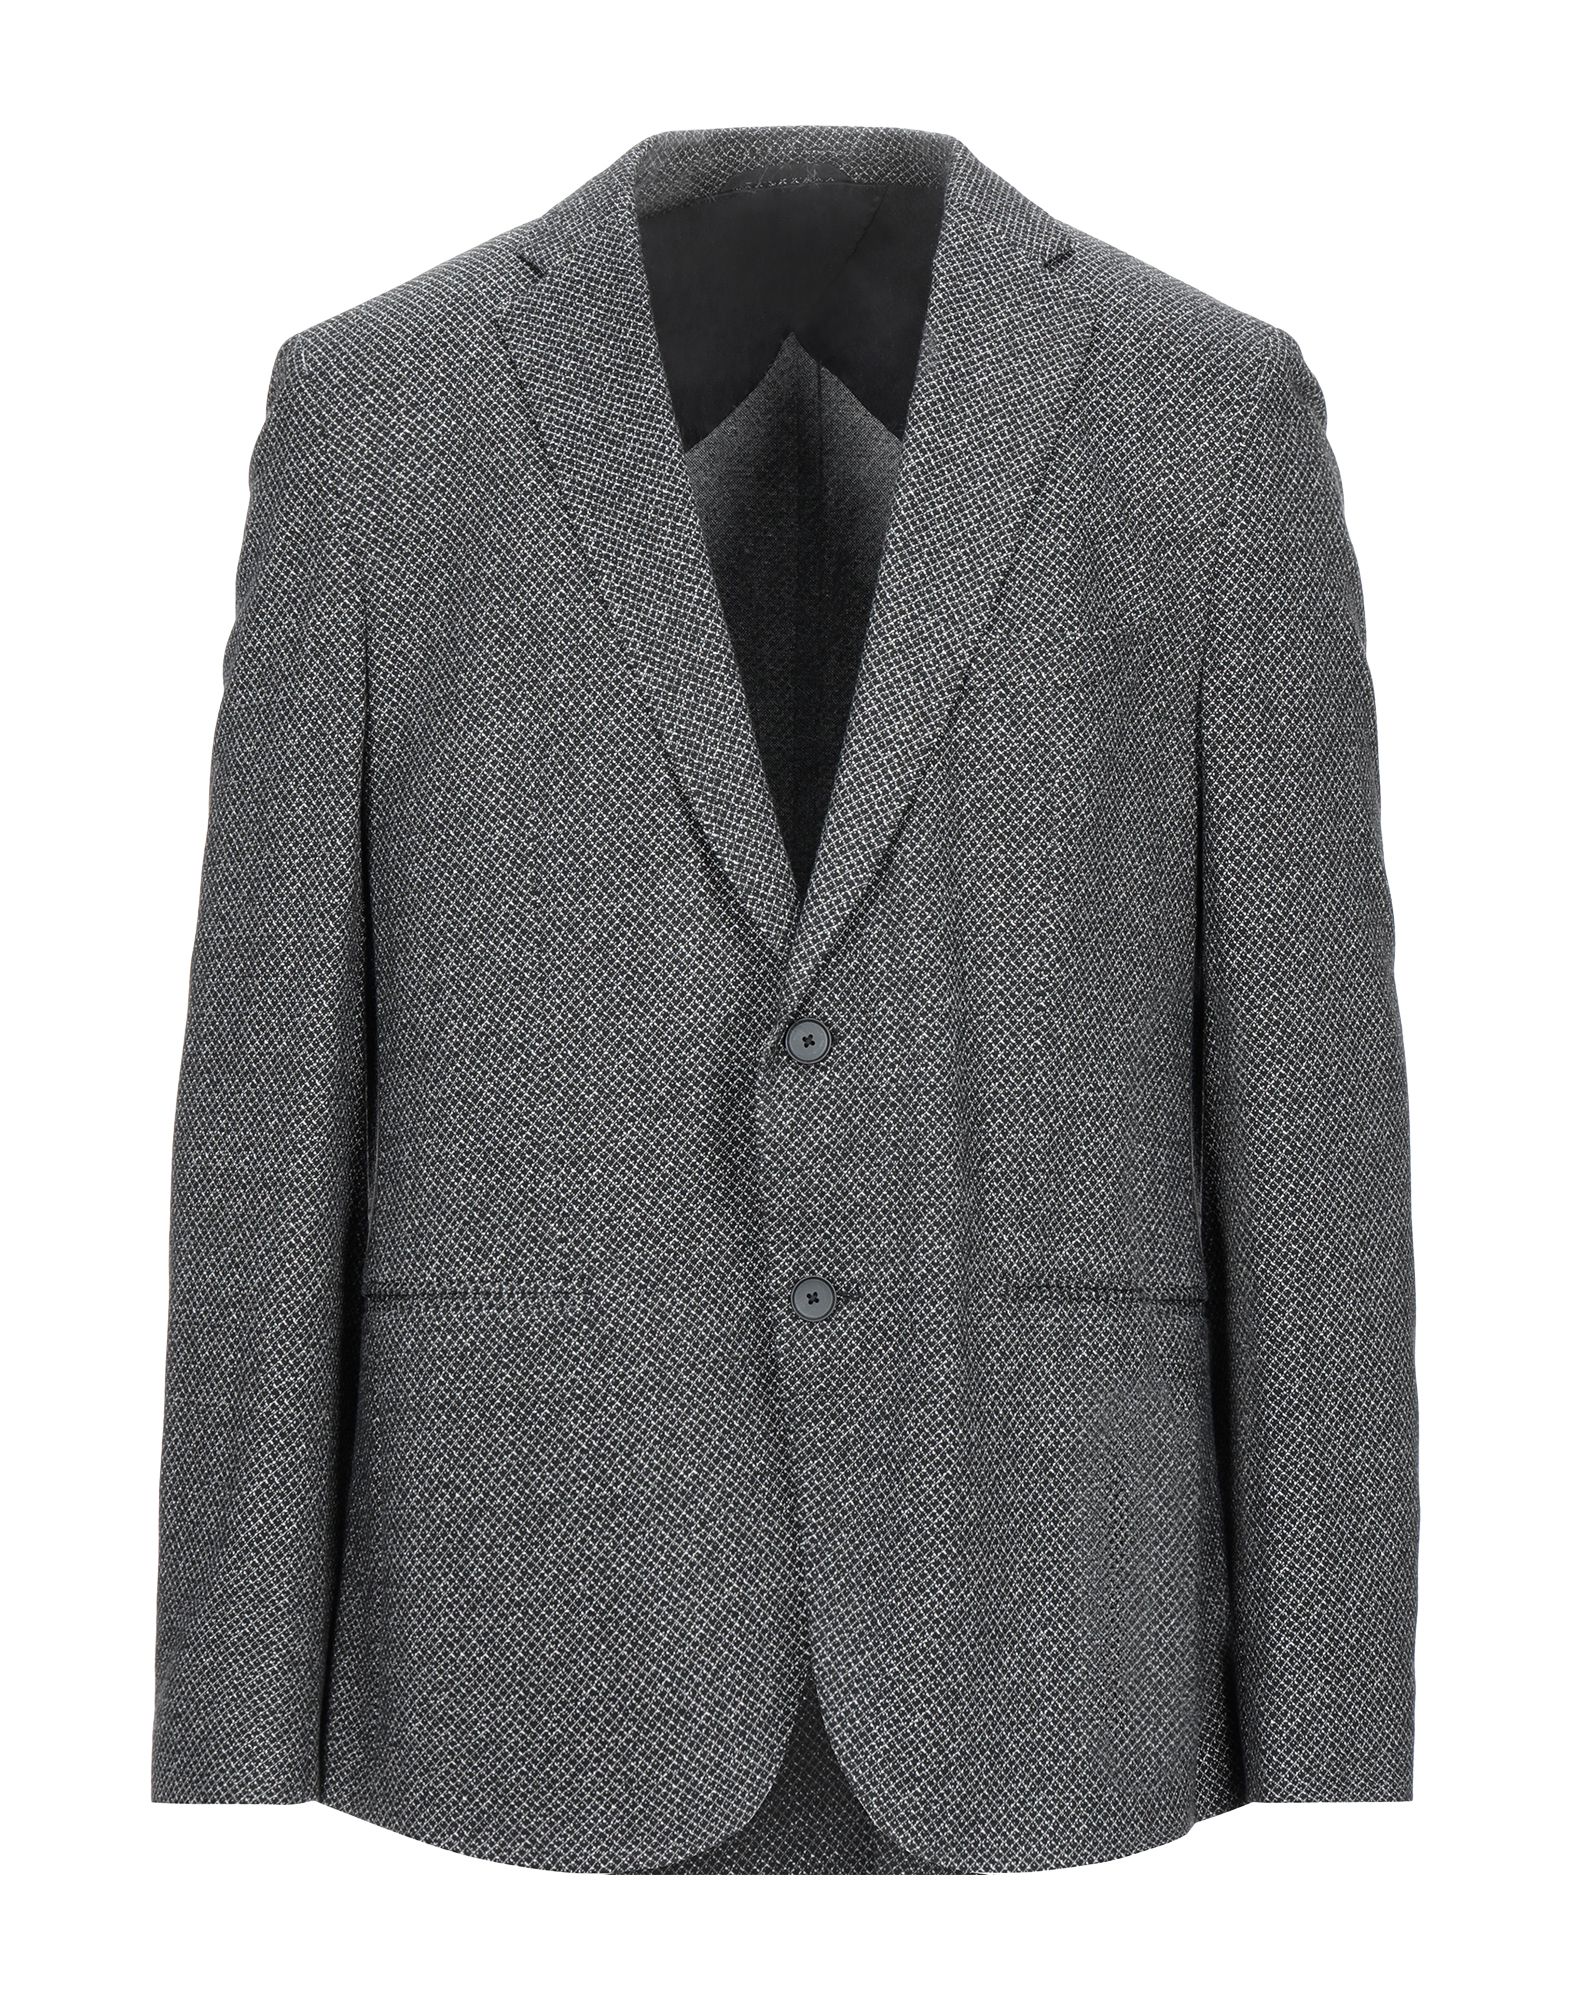 BOSS HUGO BOSS Suit jackets - Item 49580031